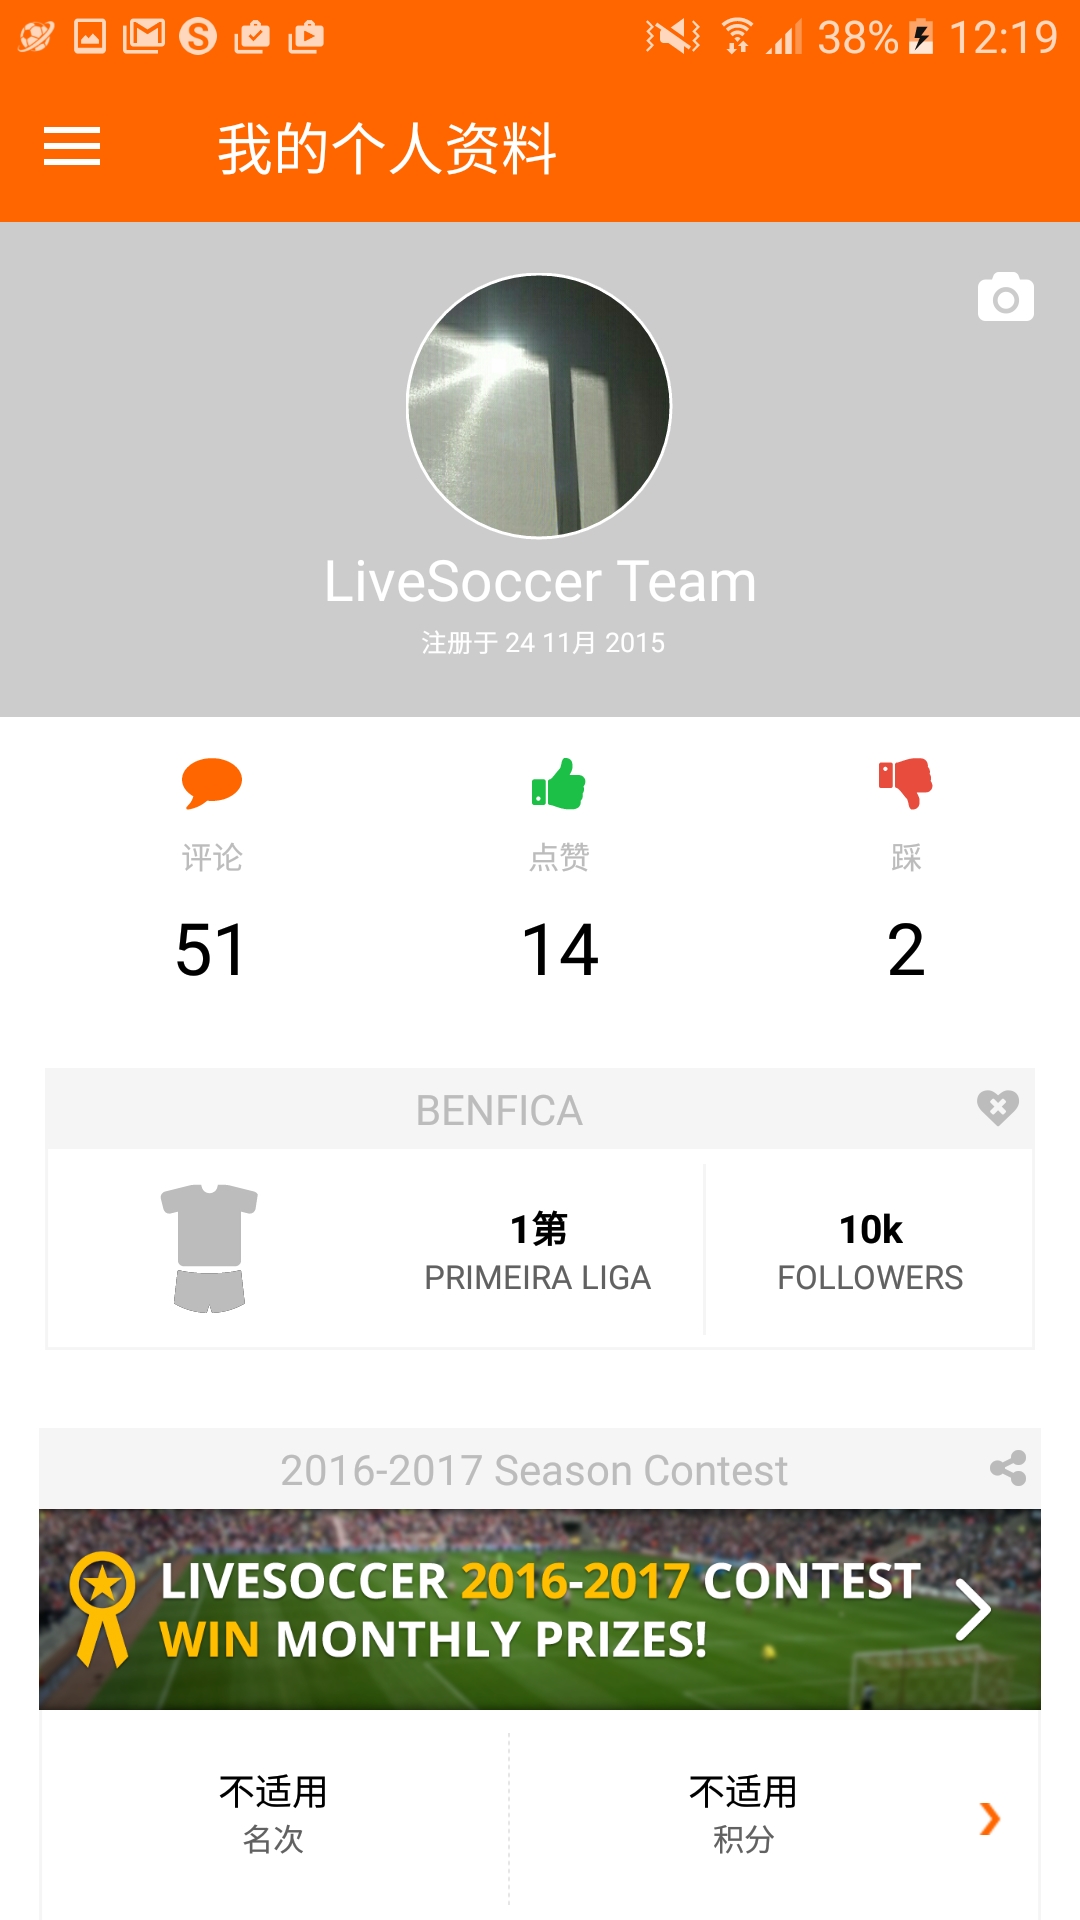 LiveSoccer 世界杯2014年巴西截图3